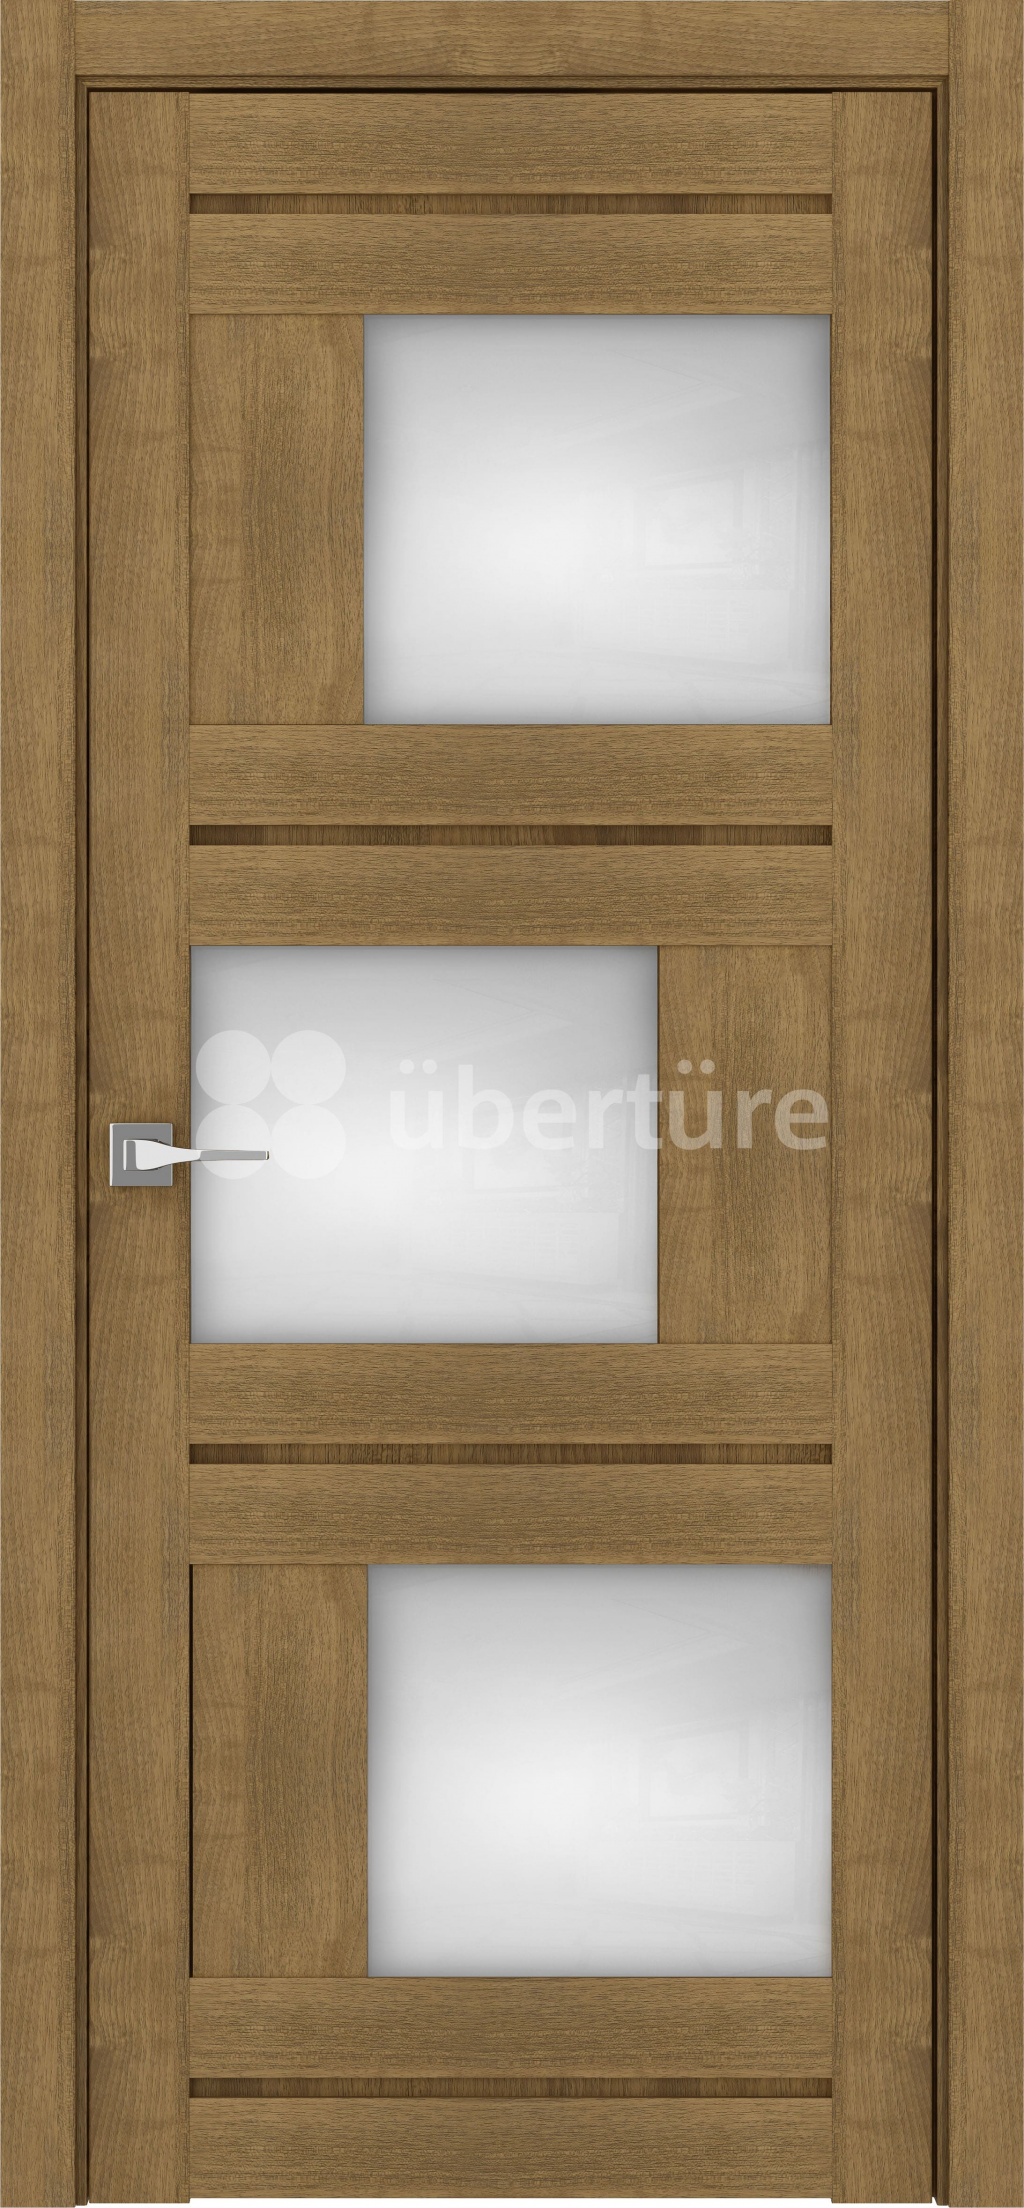 Uberture Межкомнатная дверь Light ПДО 2181, арт. 17436 - фото №1